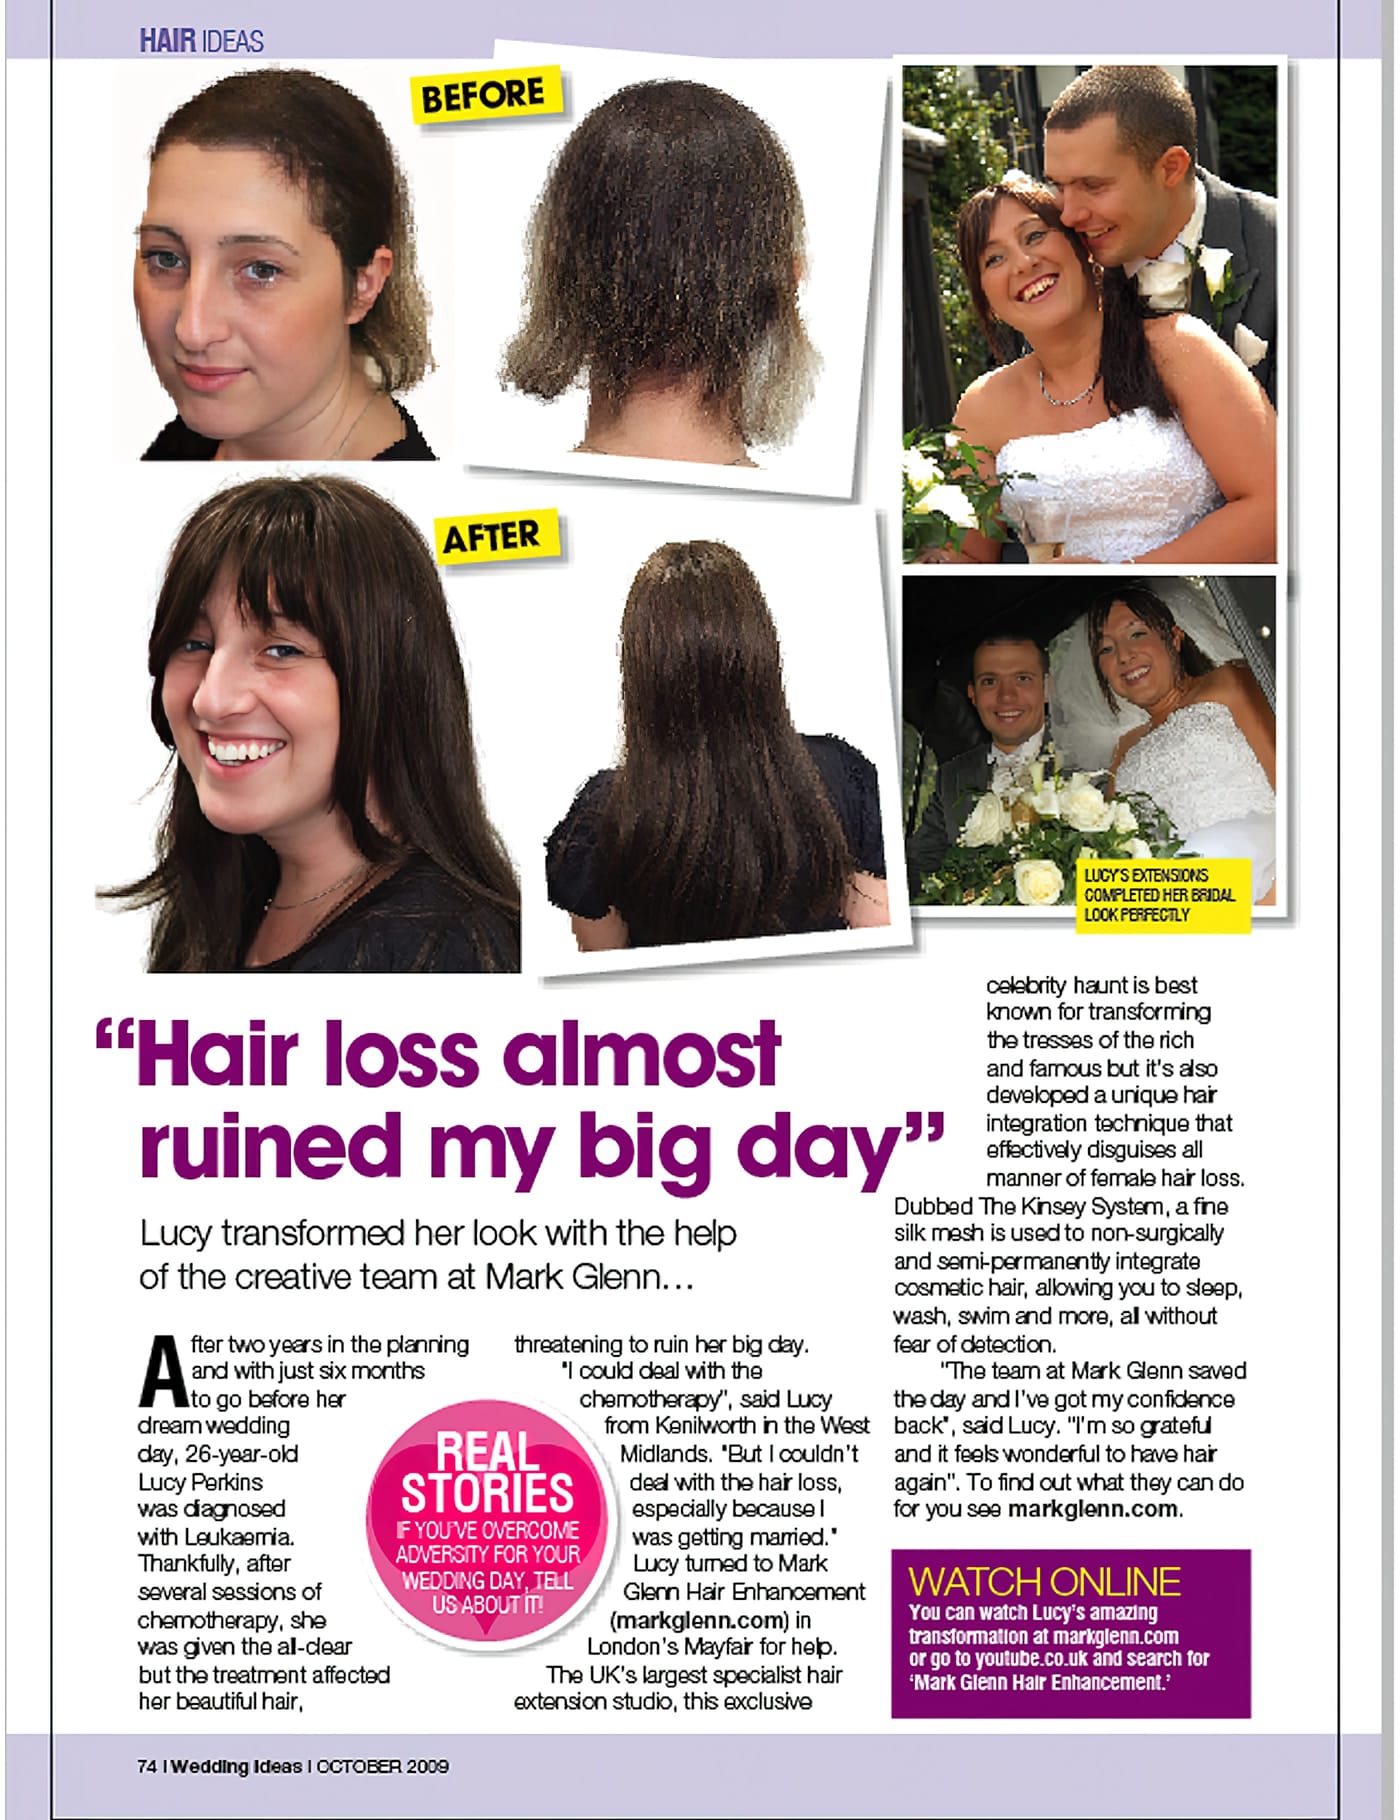 HL103-M - Leukaemia Hair Loss Restored for Wedding - Kinsey System, London  | Case Study